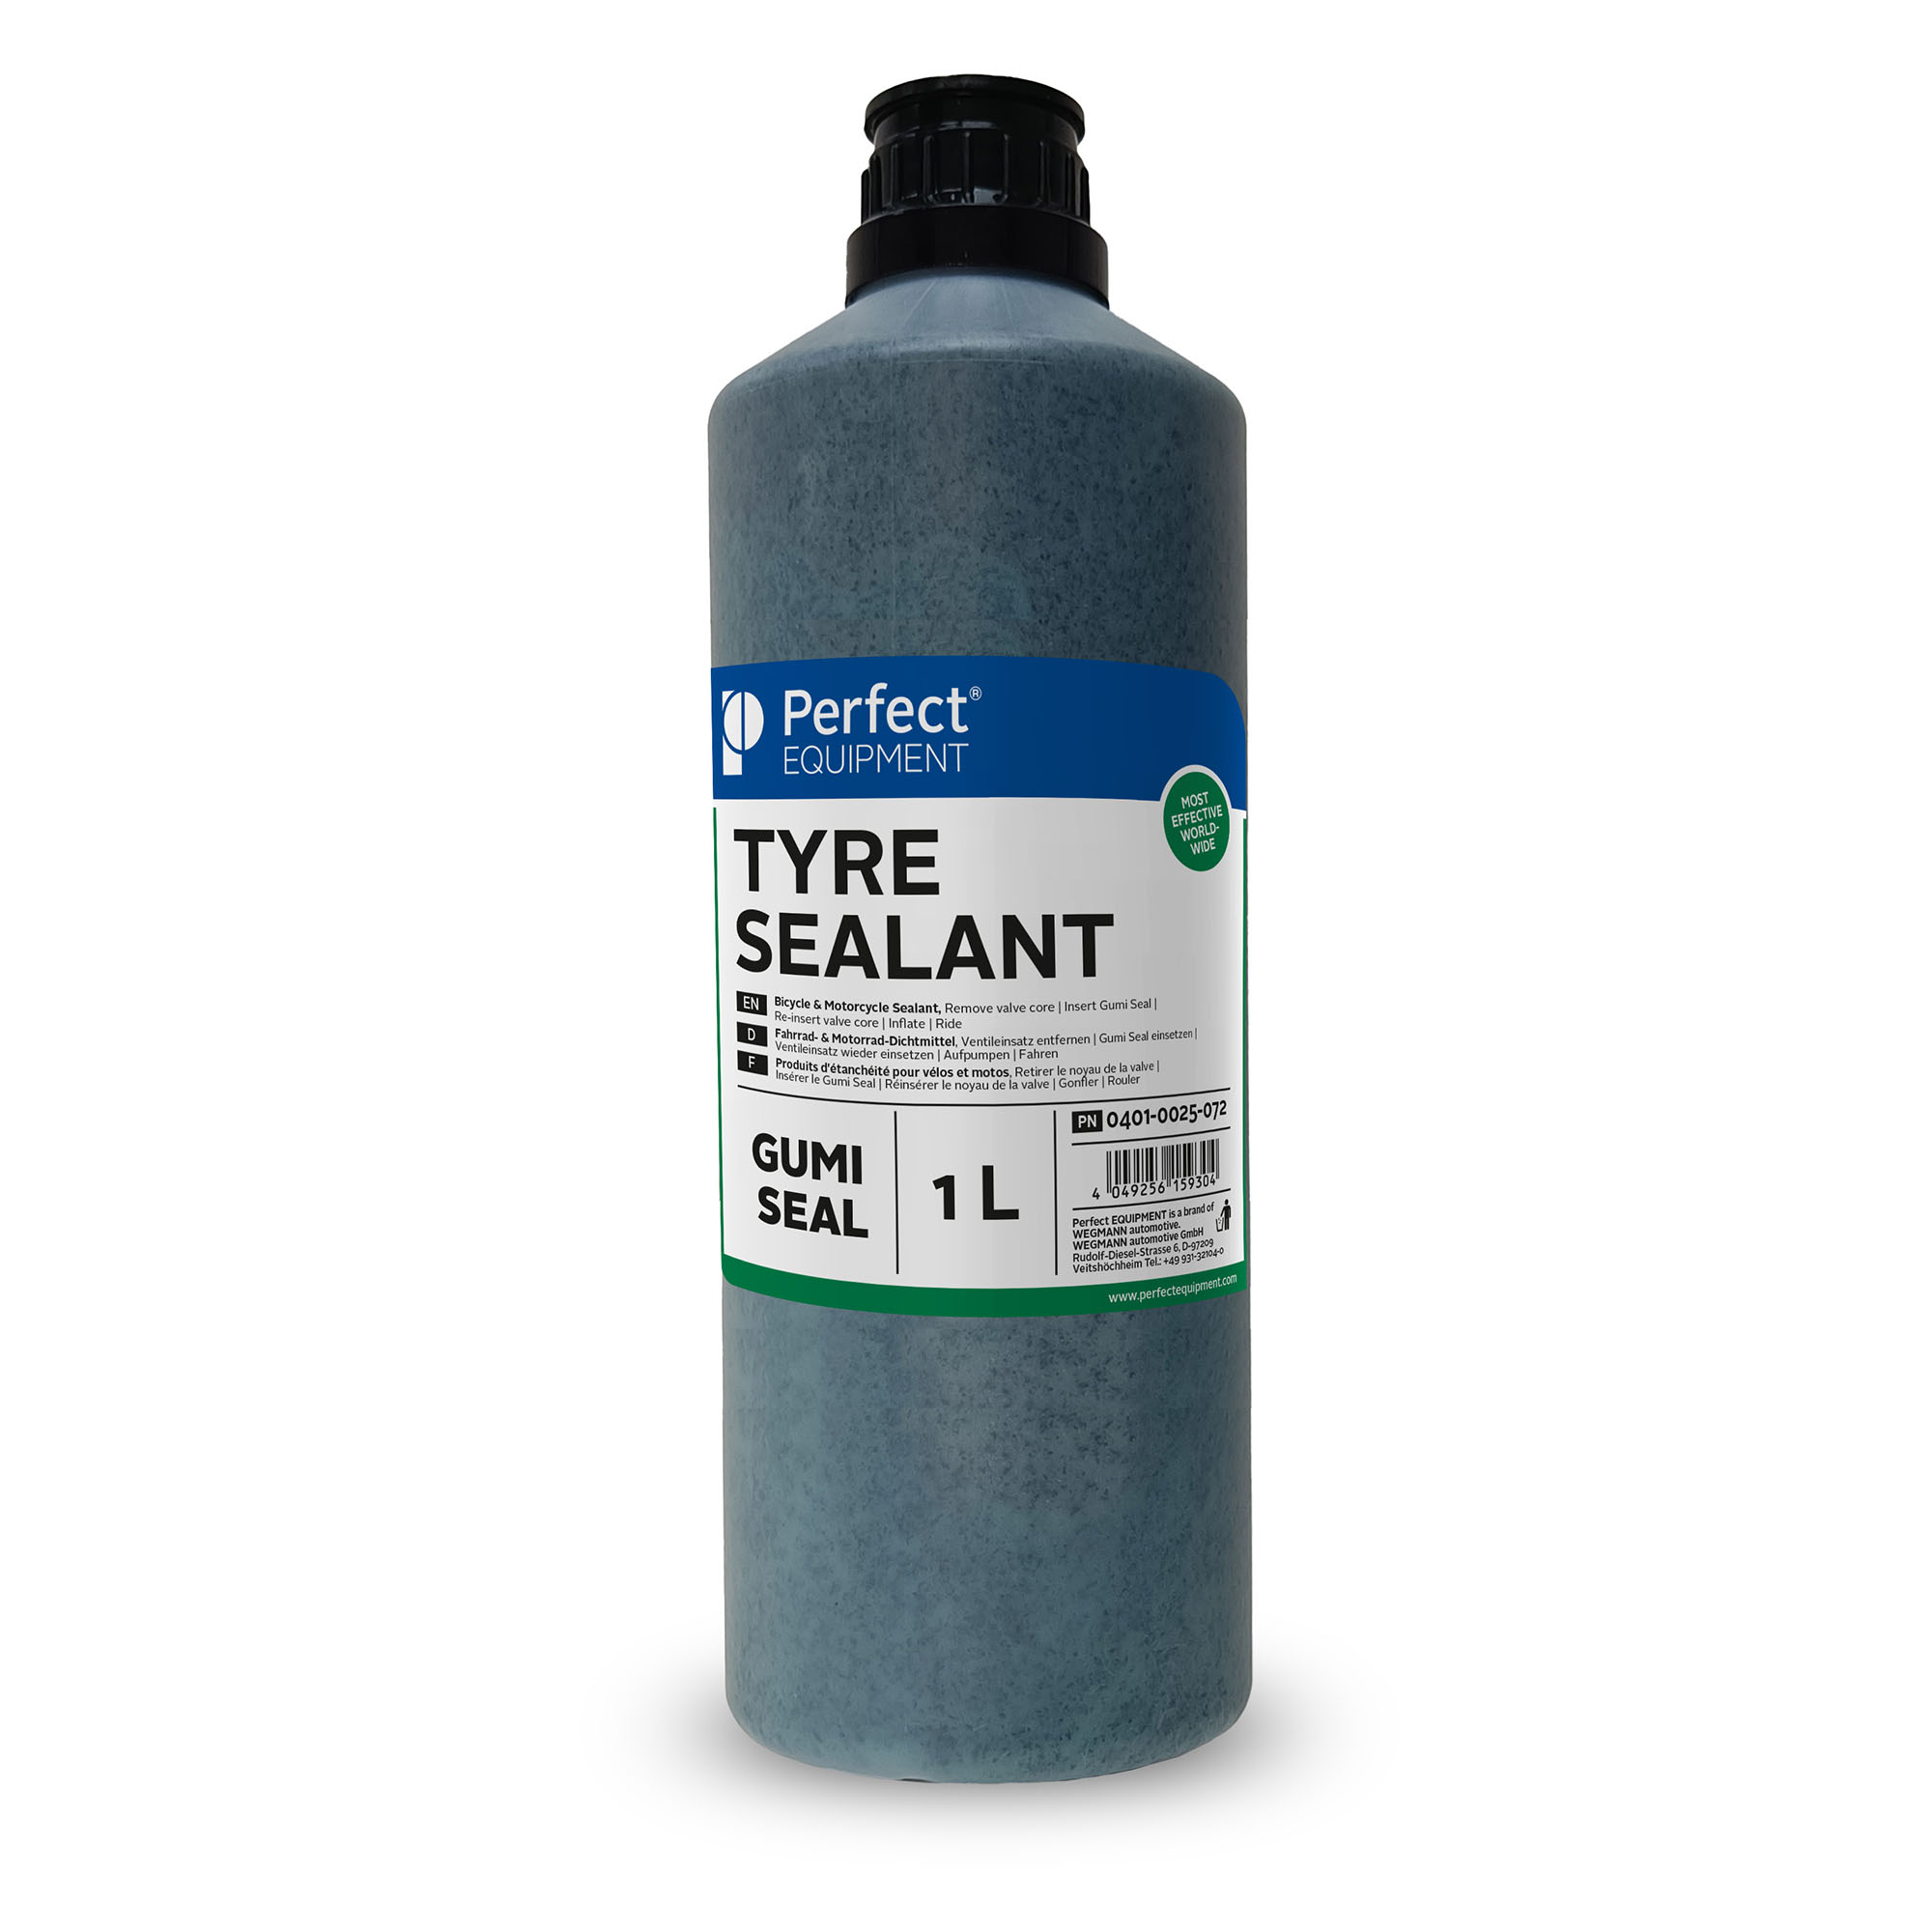 Tyre sealant - Gumi Seal, 1l, bottle